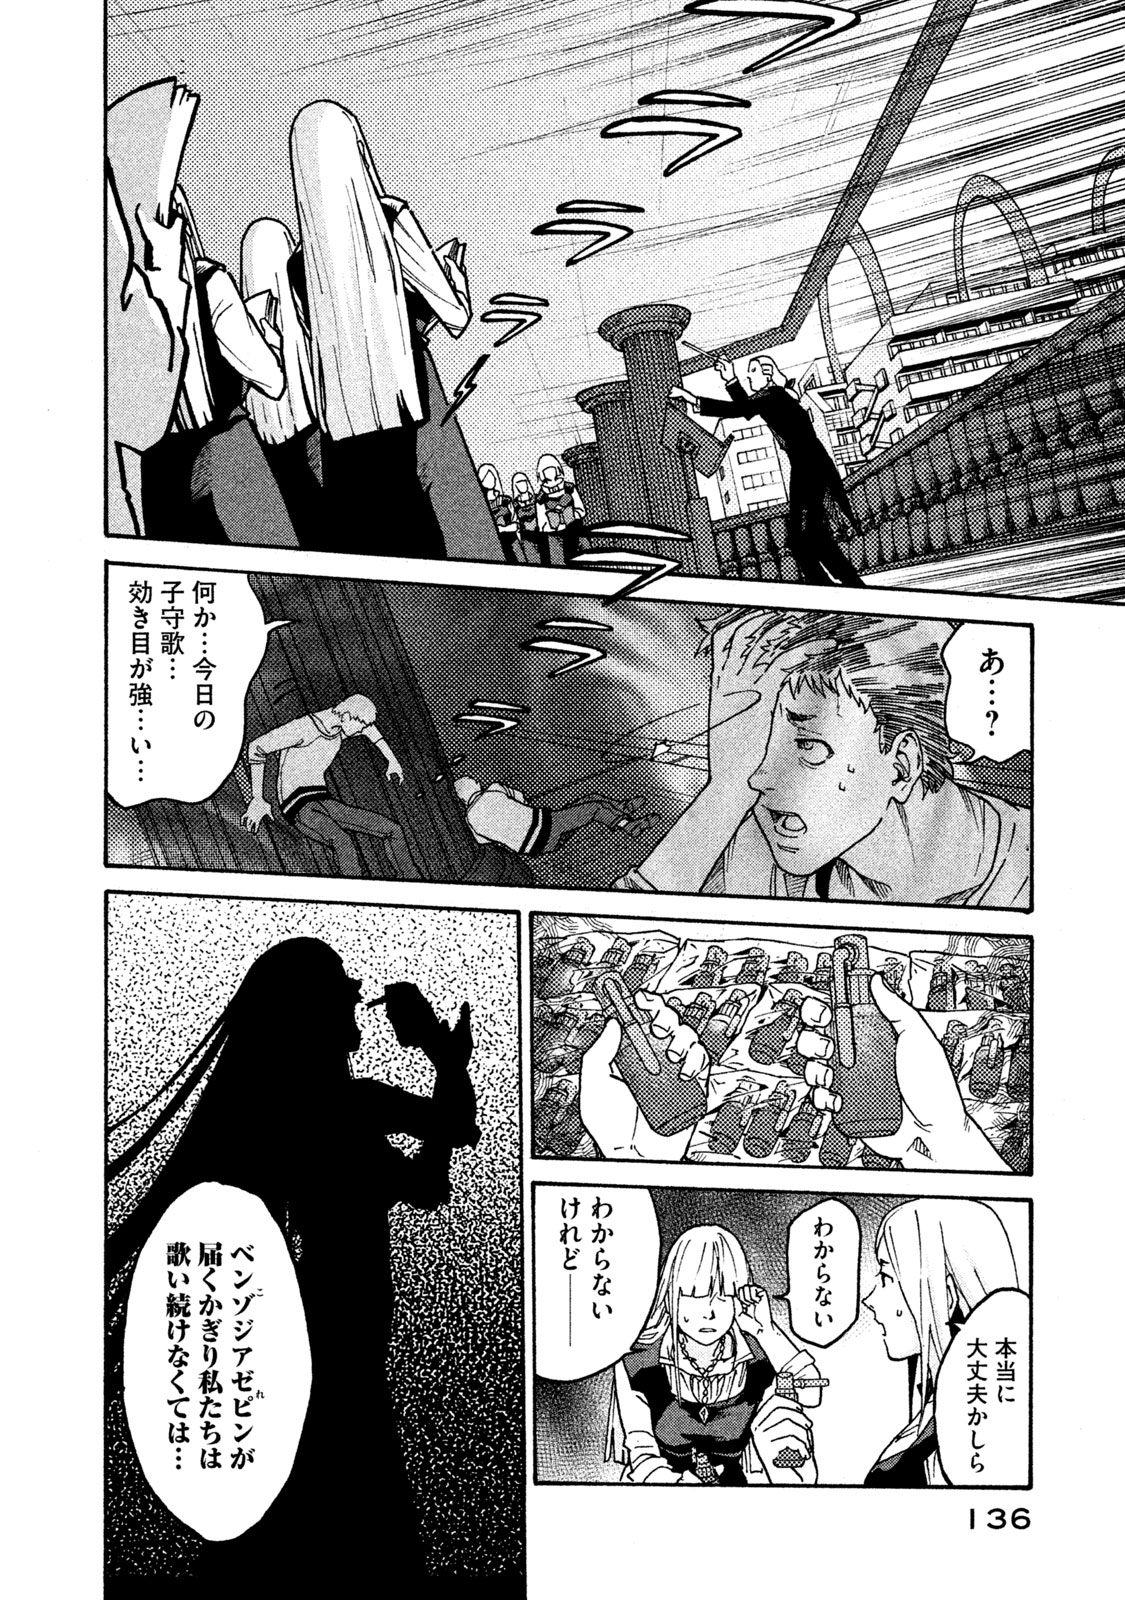 Hataraku Saibou BLACK - Chapter 31 - Page 12